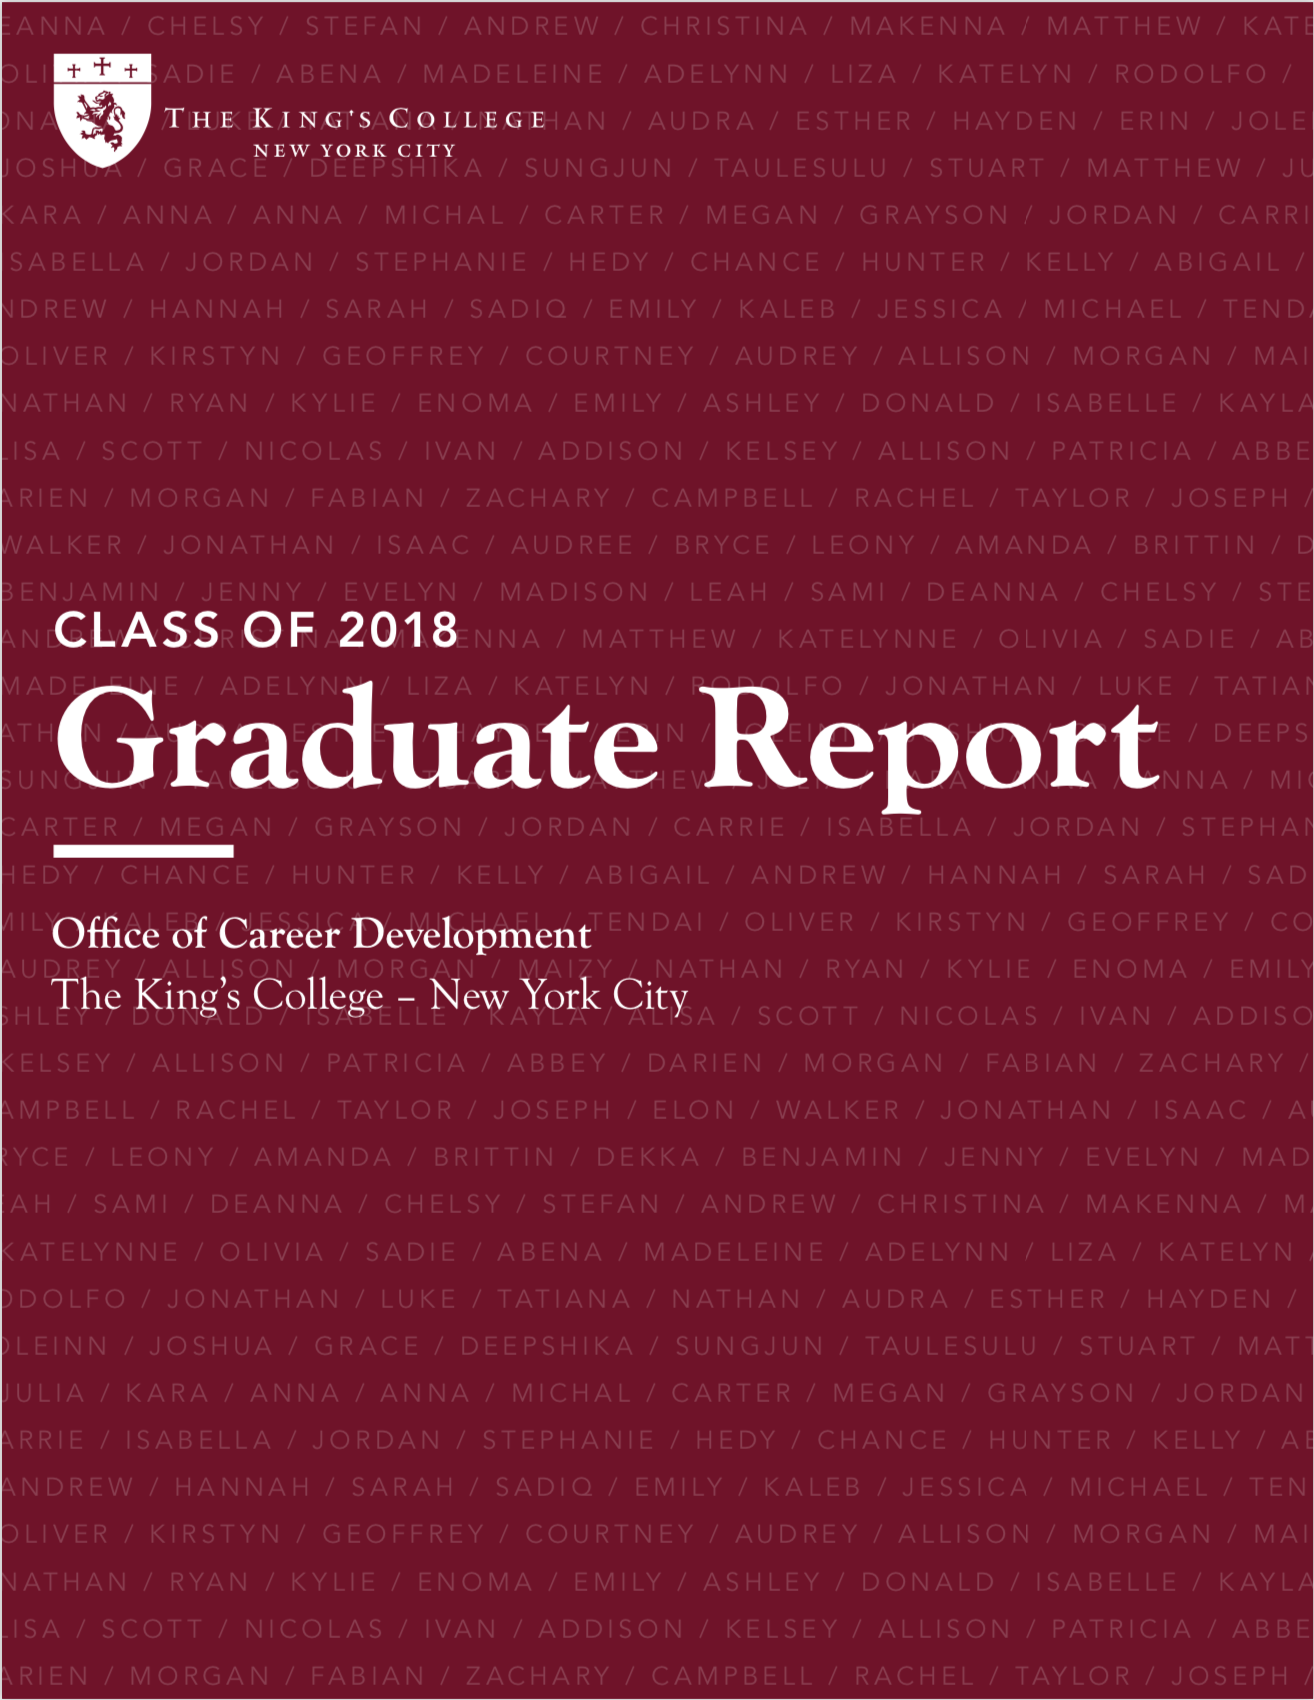 Graduate Report 2018 cover